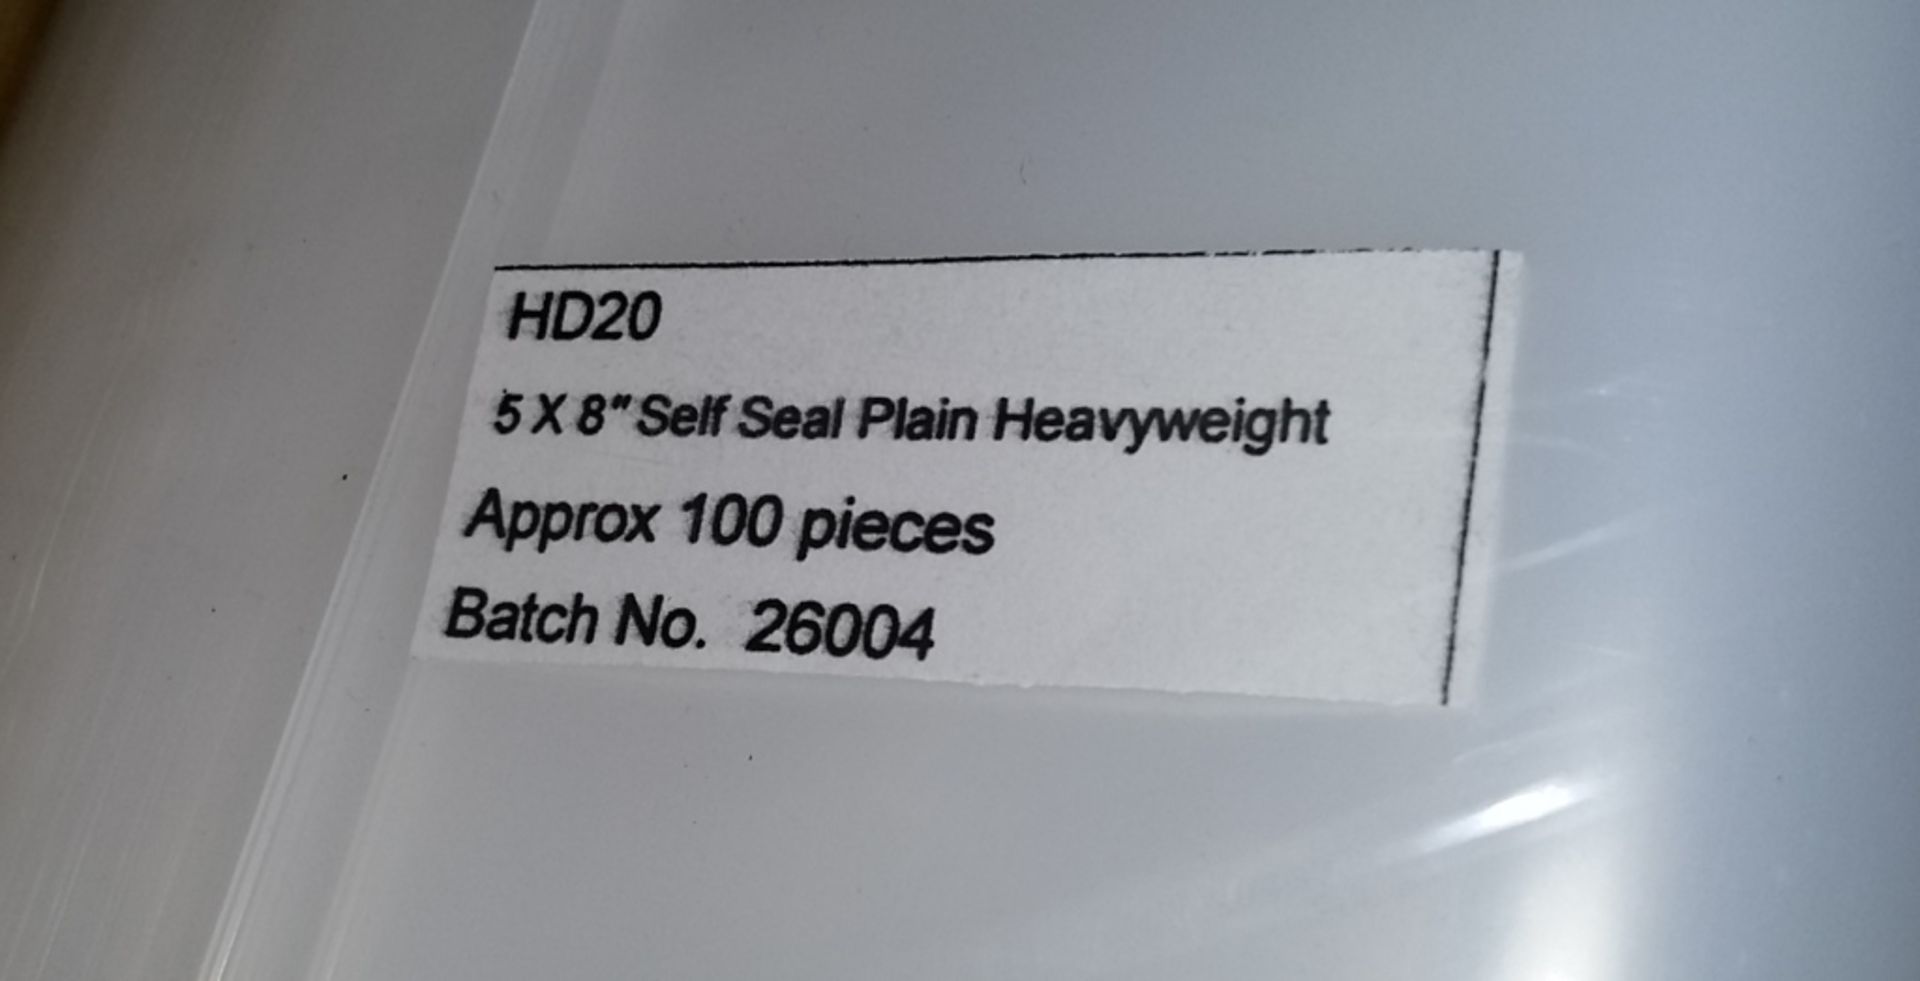 Plastic bags - self seal heavyweight - Image 2 of 2